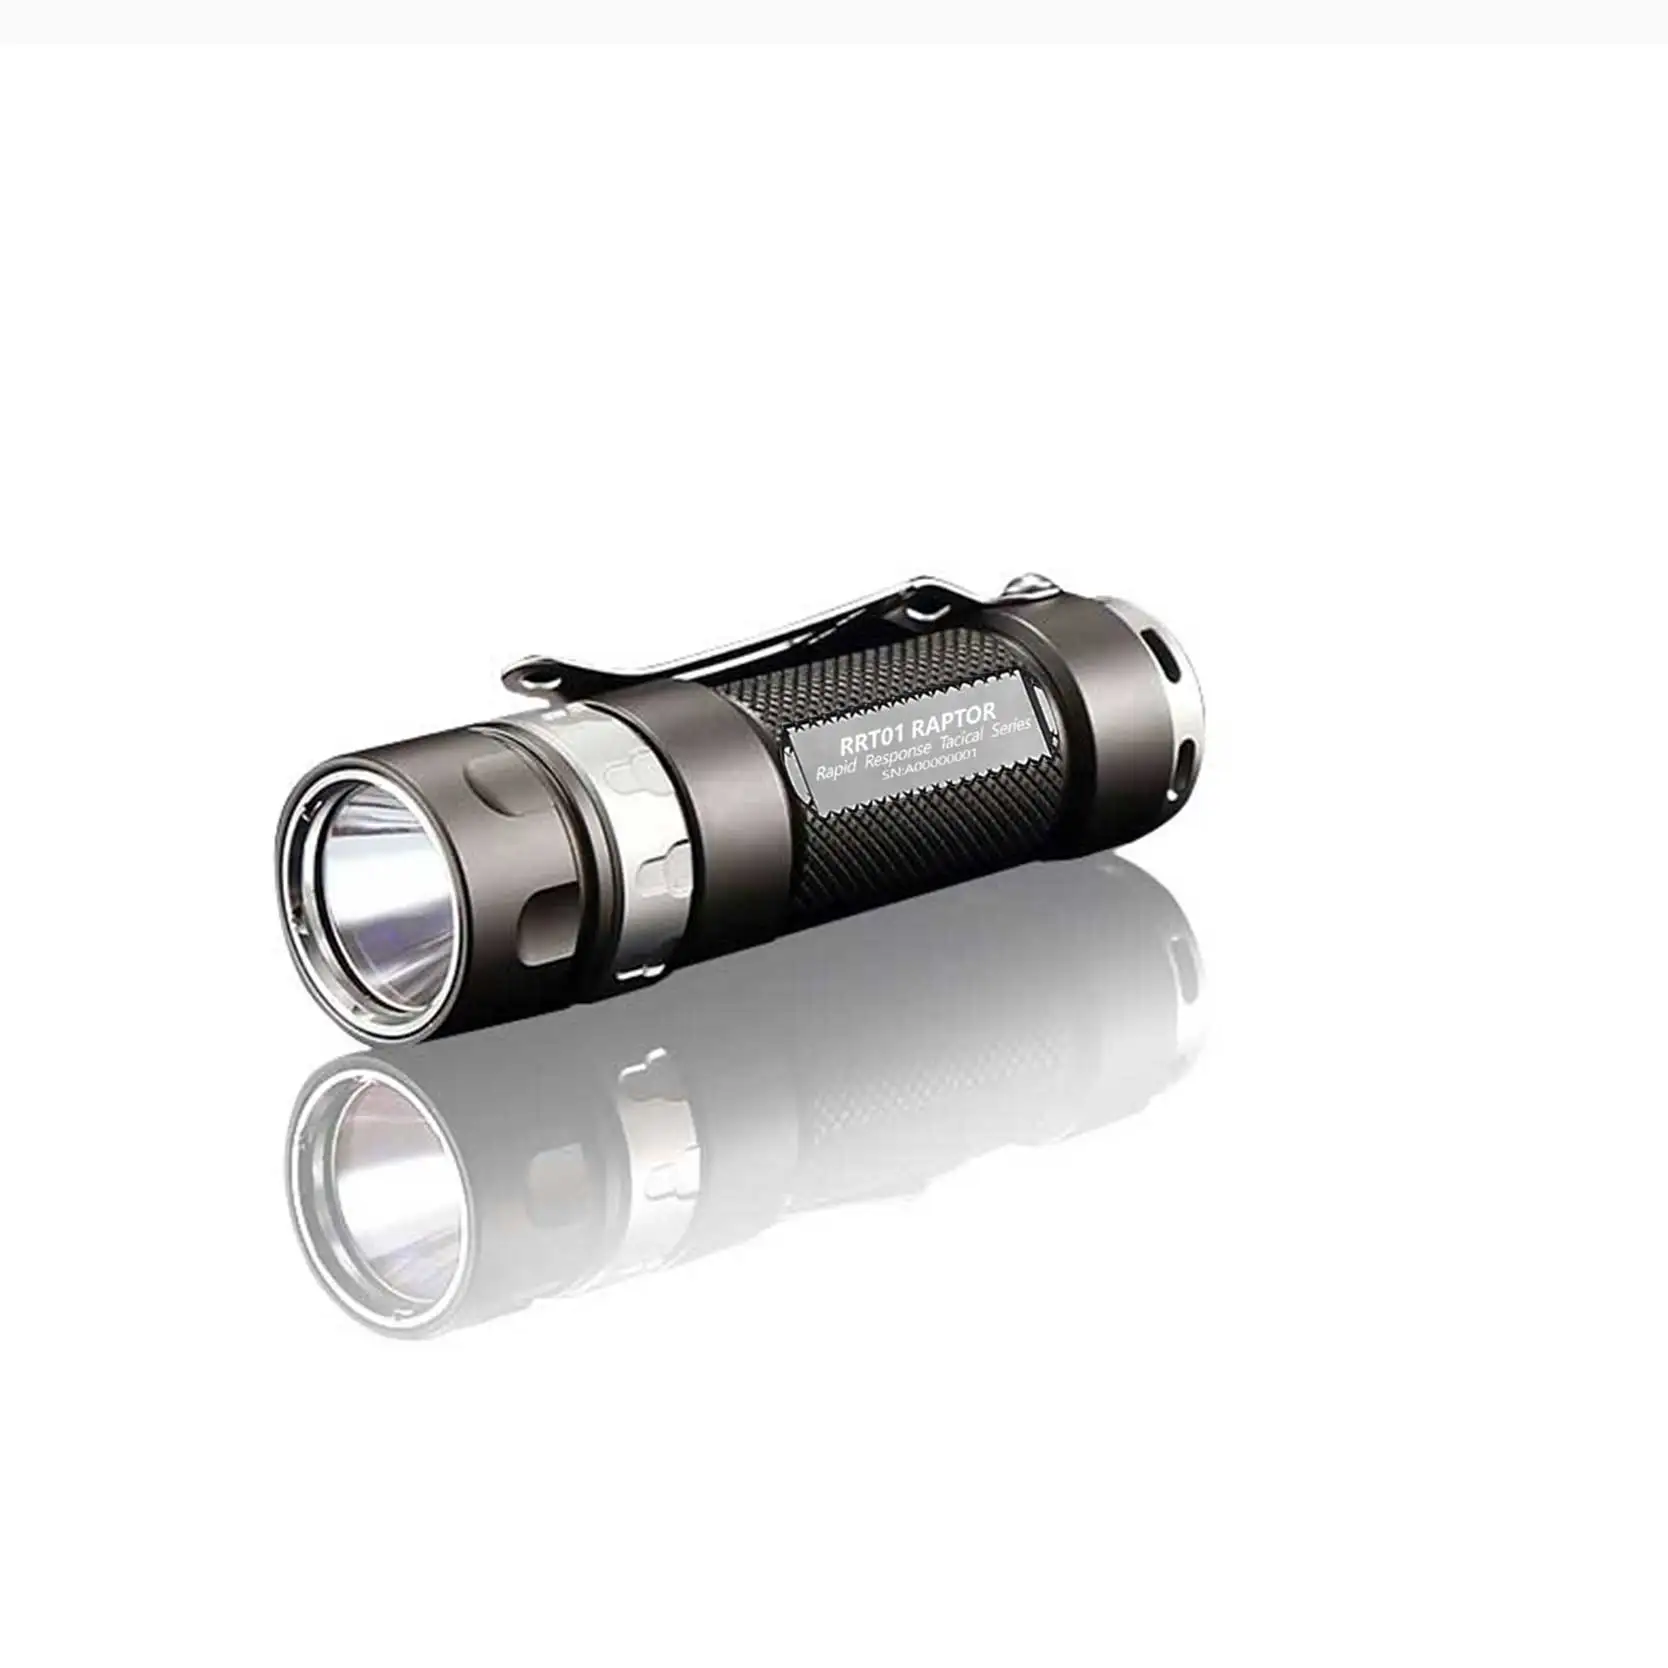 JETBeam RRT01 950LM XPL/Nichia 219C 3-Modes Tactical Flashlight IPX8 220M LED Torch for Camping Torch Emergency Lamp Lantern enlarge